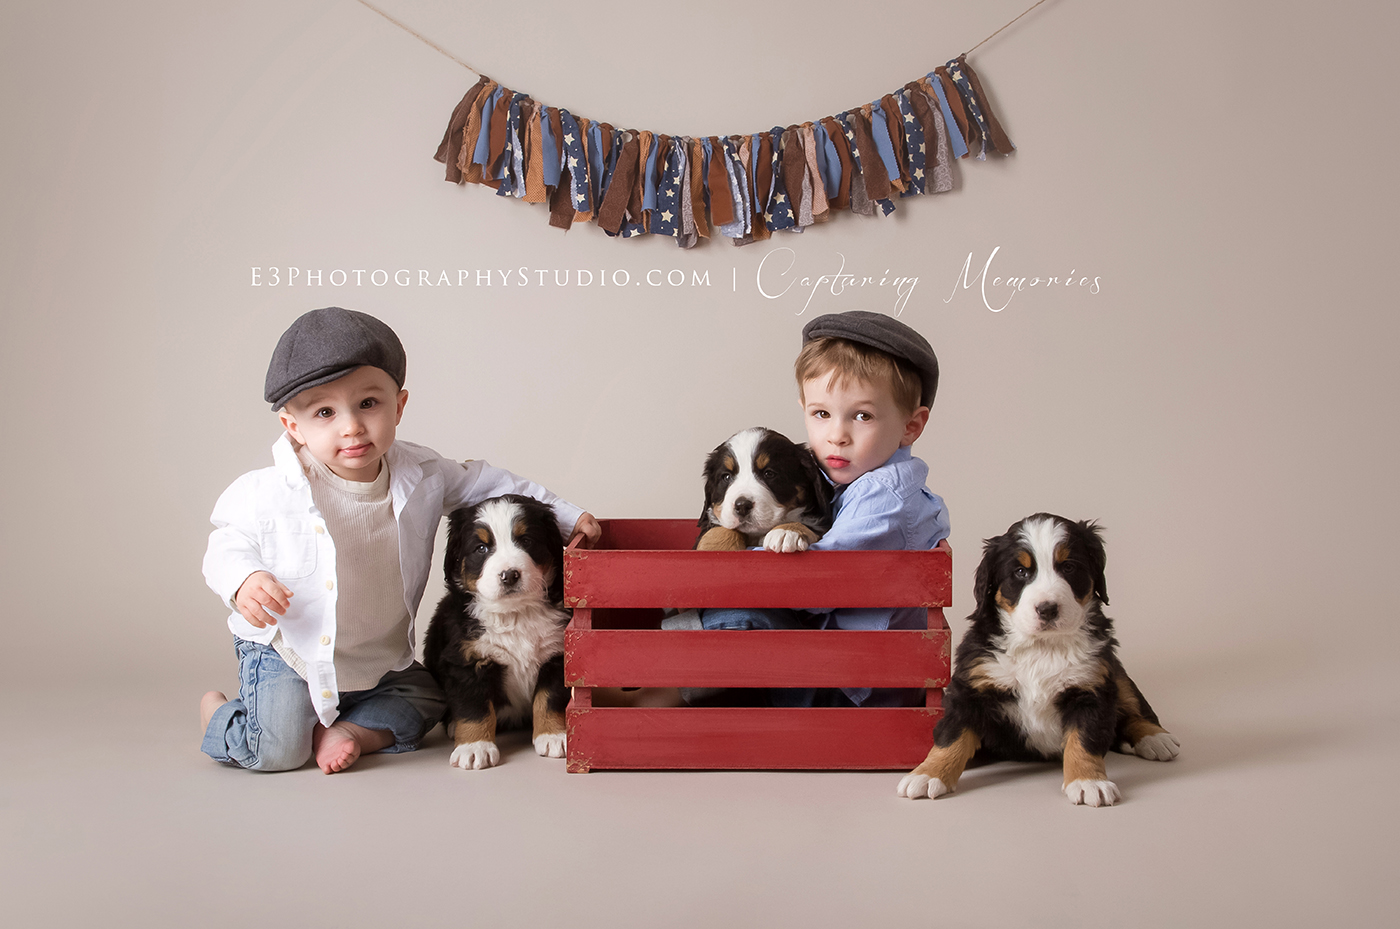 E3 Photography Studio. Nebraska Baby Child Photographer | Central Nebraska Pet Photography | Hastings NE Portrait Studio Artist 